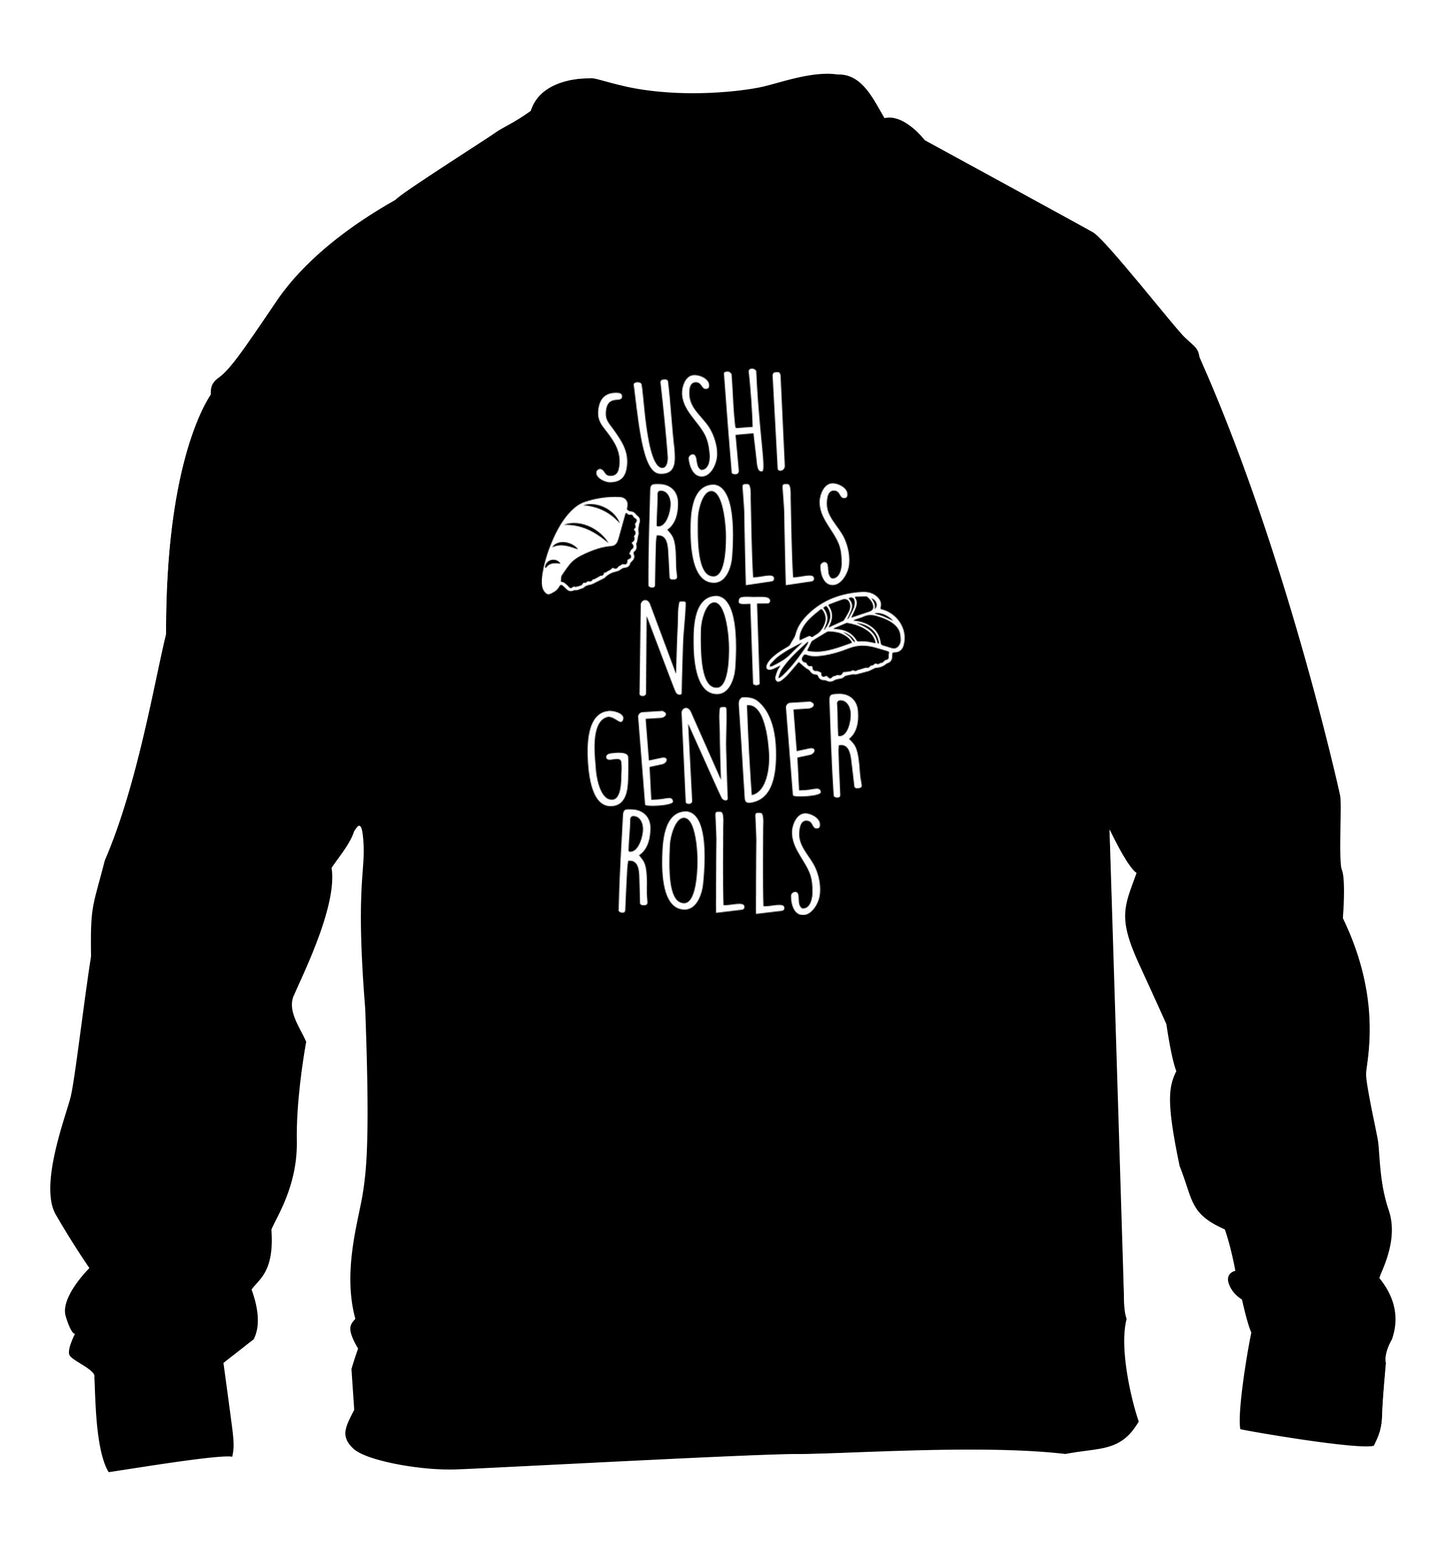 Sushi rolls not gender rolls children's black sweater 12-14 Years